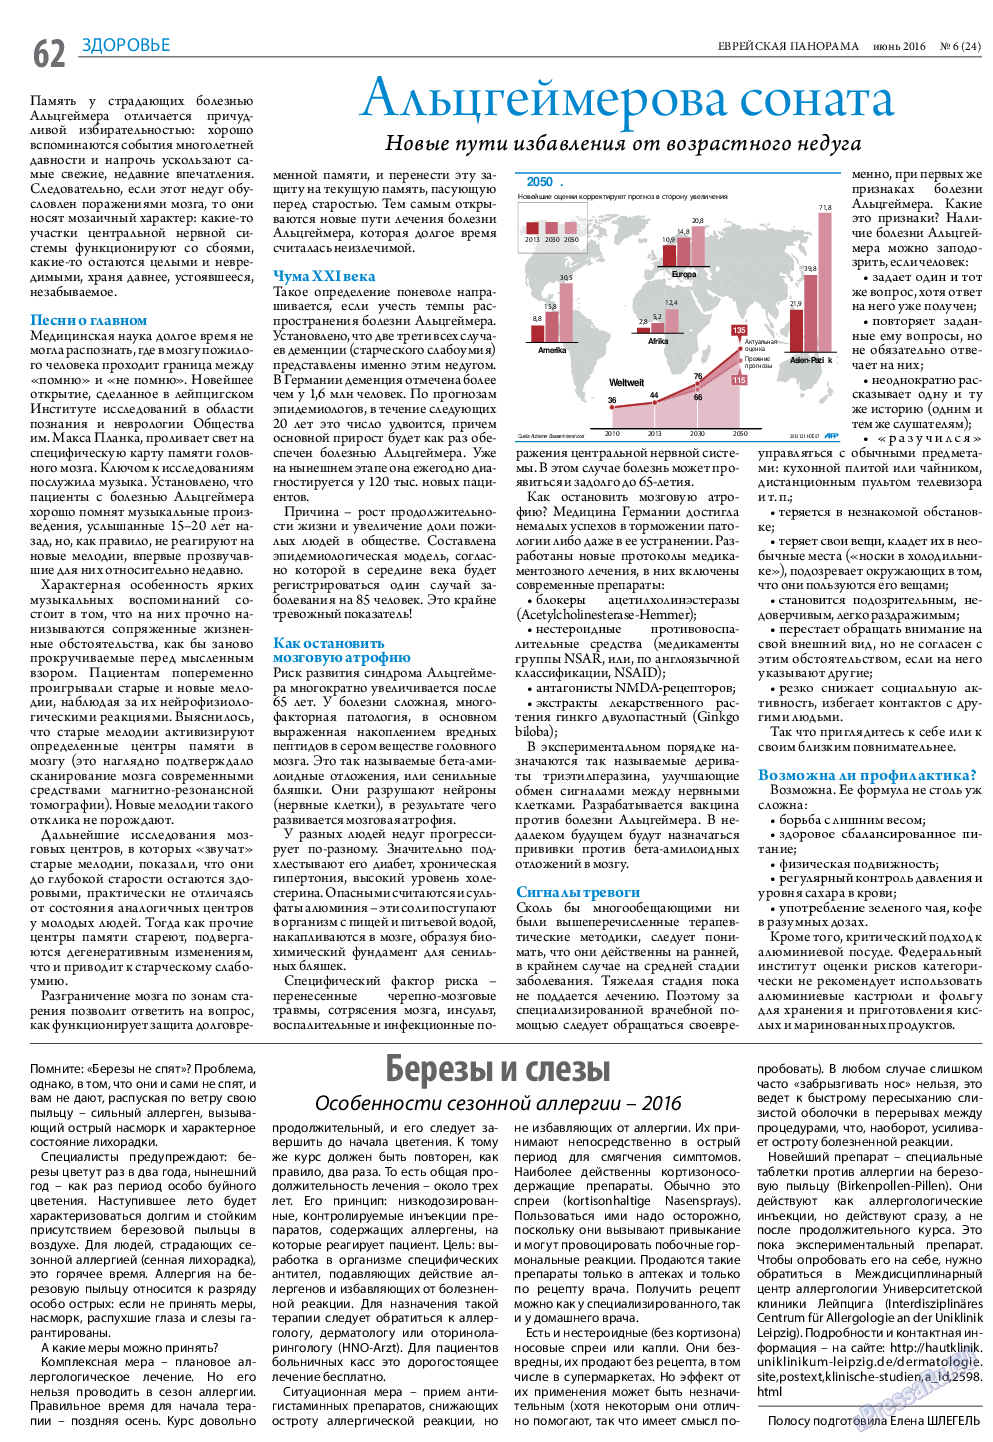 Еврейская панорама, газета. 2016 №6 стр.62